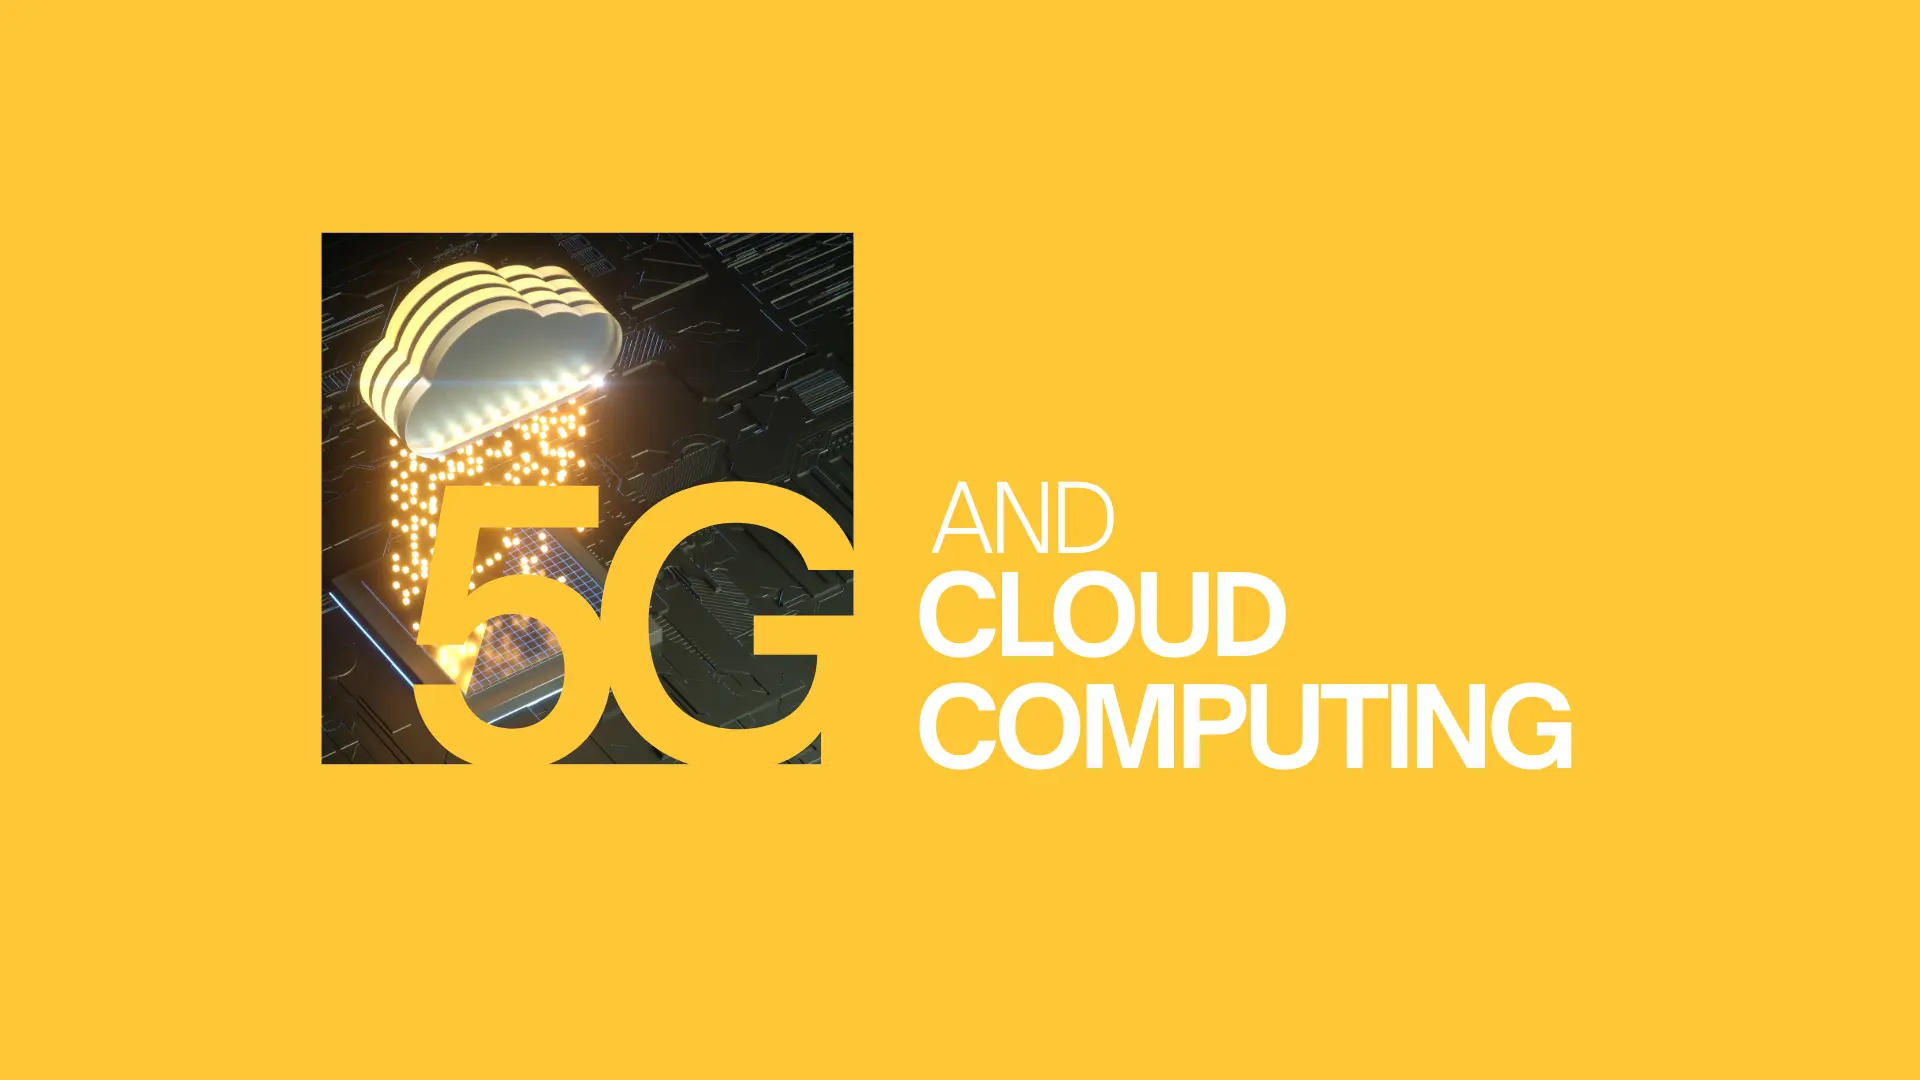 Cloud computing and 5G